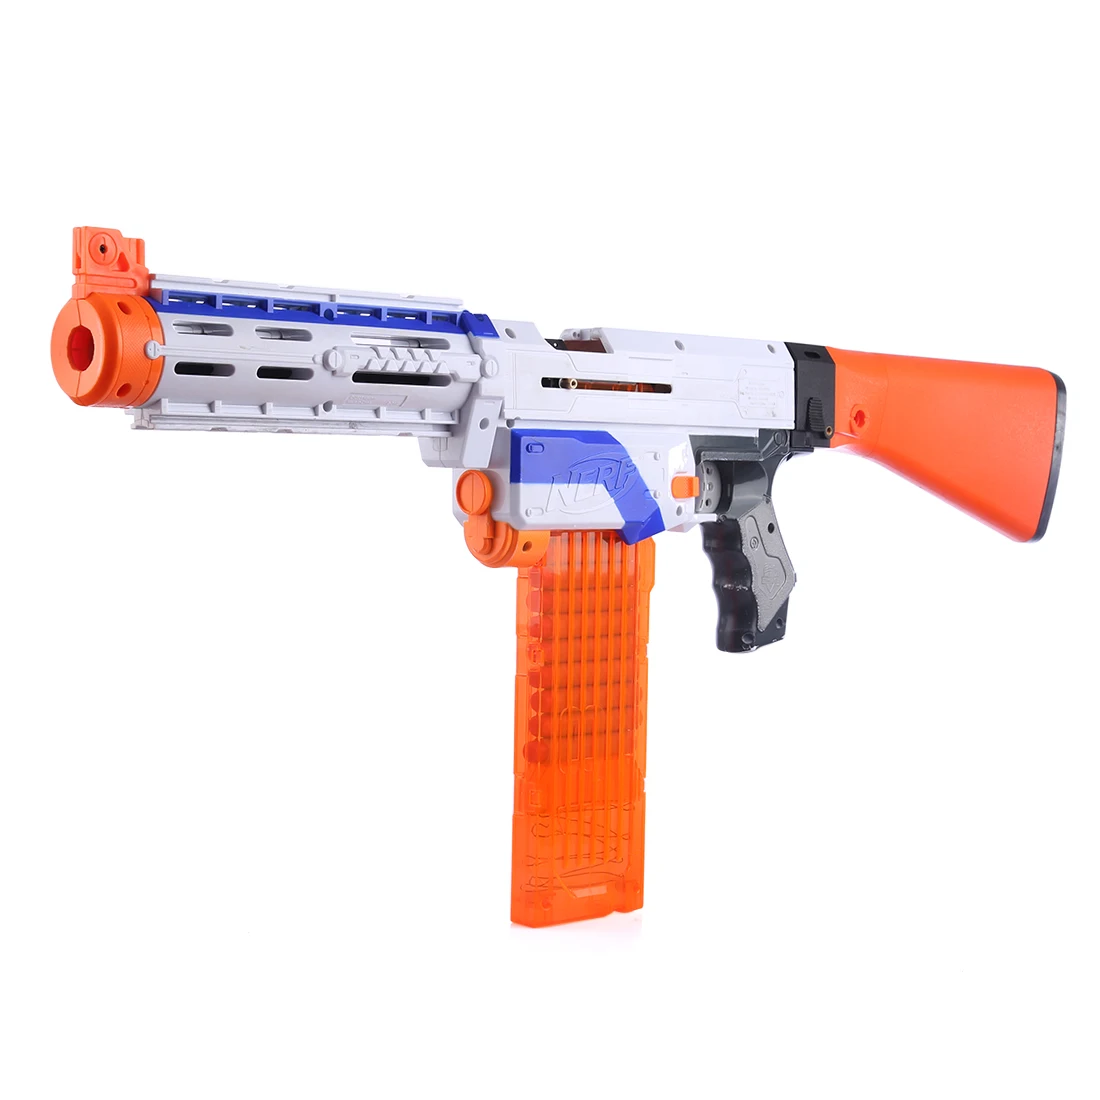 4 шт. картридж для игрушечного пистолета Nerf | Игрушки и хобби